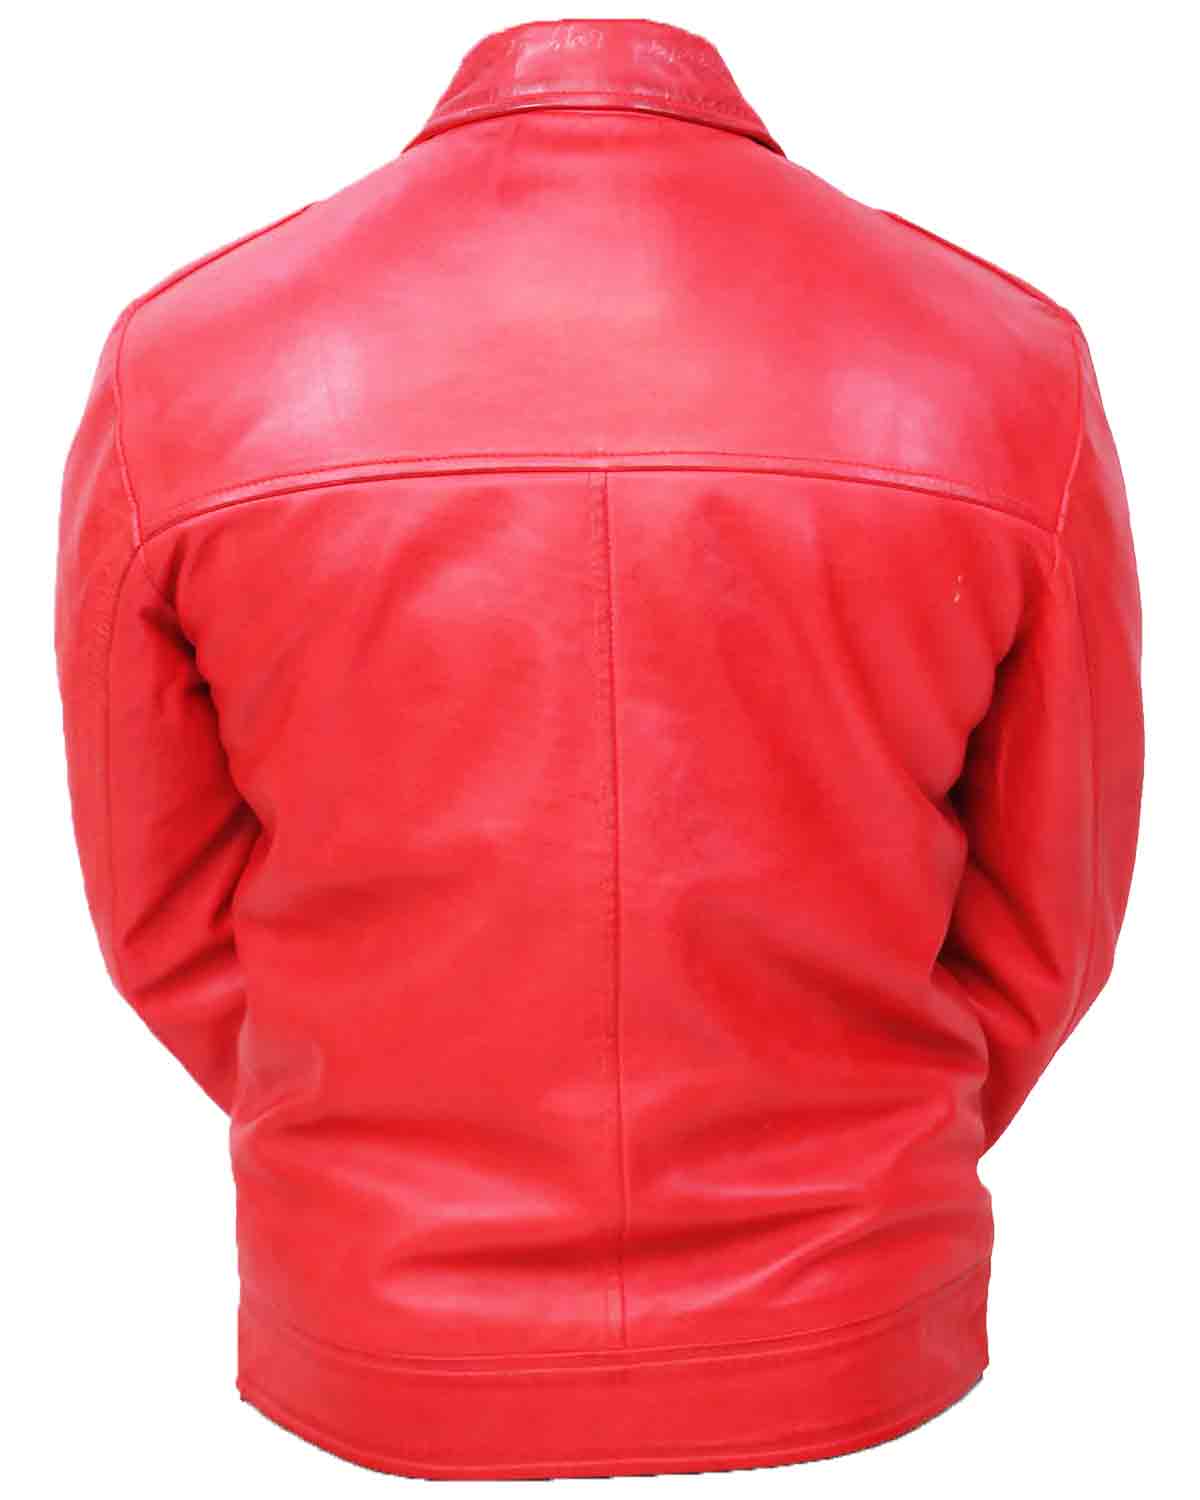 Mens Vintage Distressed Red Leather Jacket | Elite Jacket